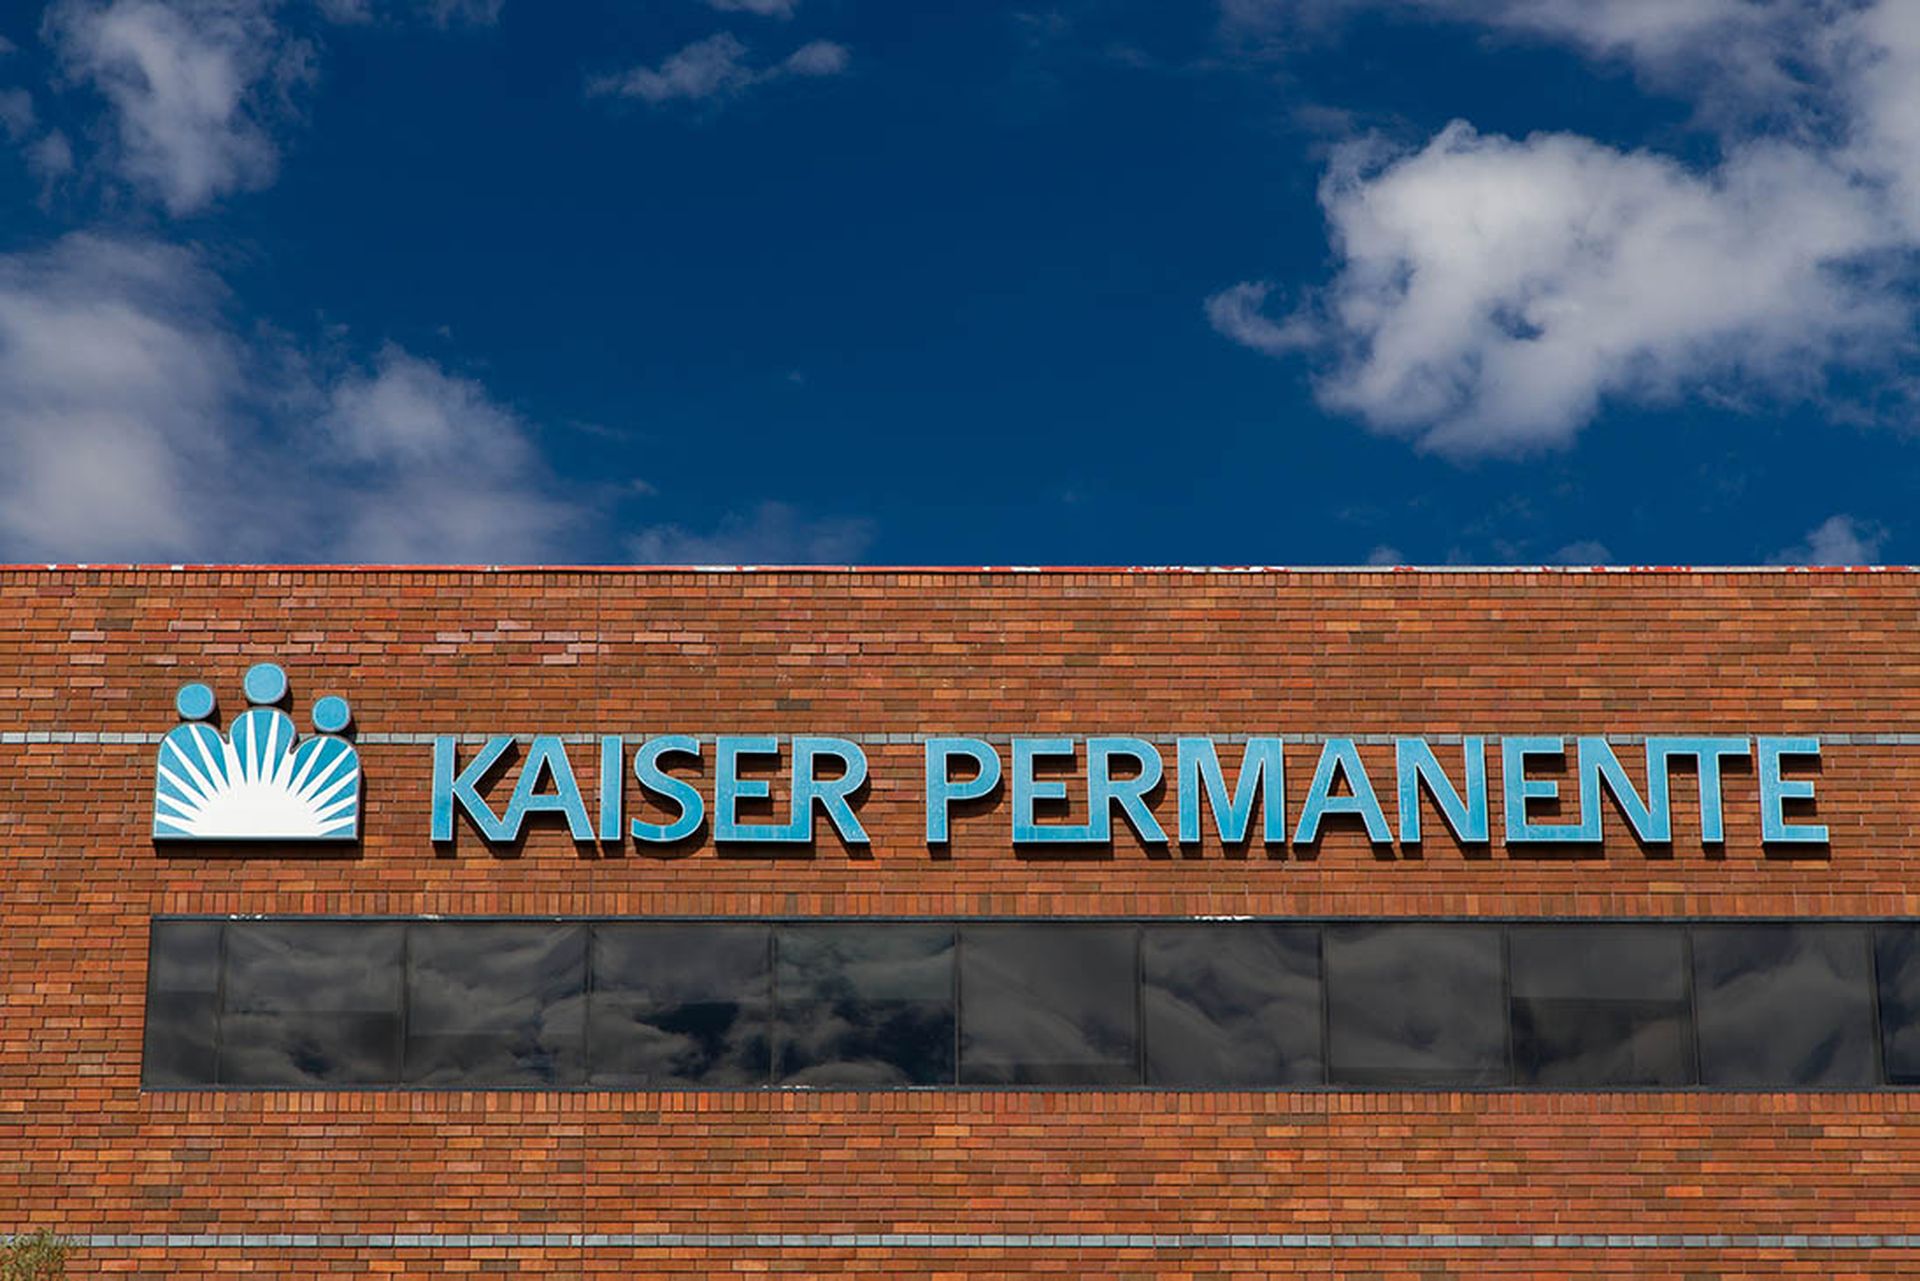 Kaiser Permanente medical care facility.